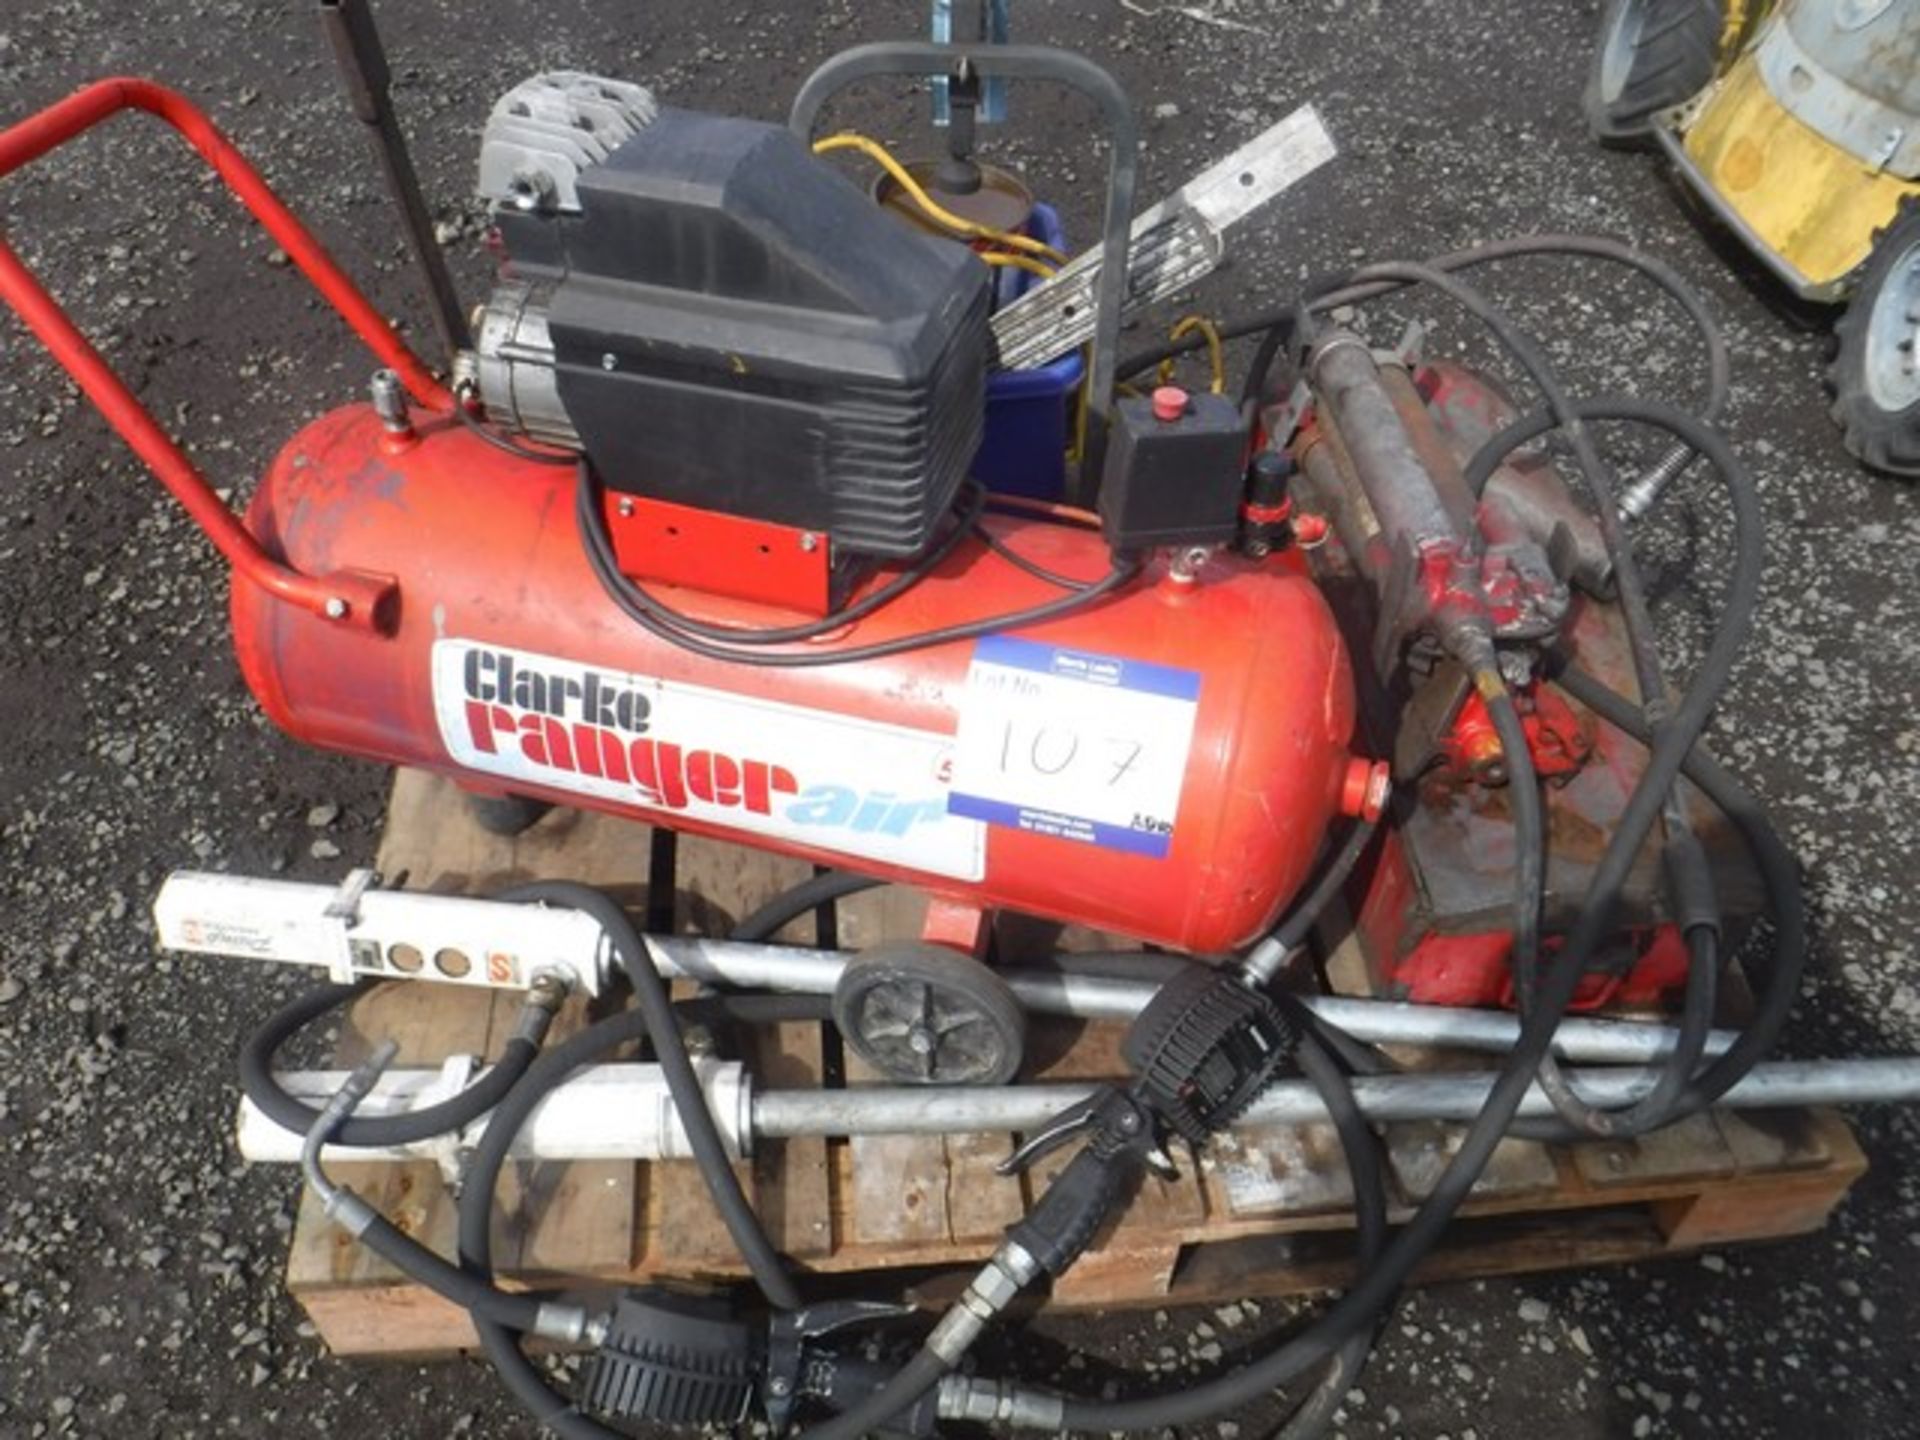 BARREL pumps, electrical tester, compressor & mixed portapowers